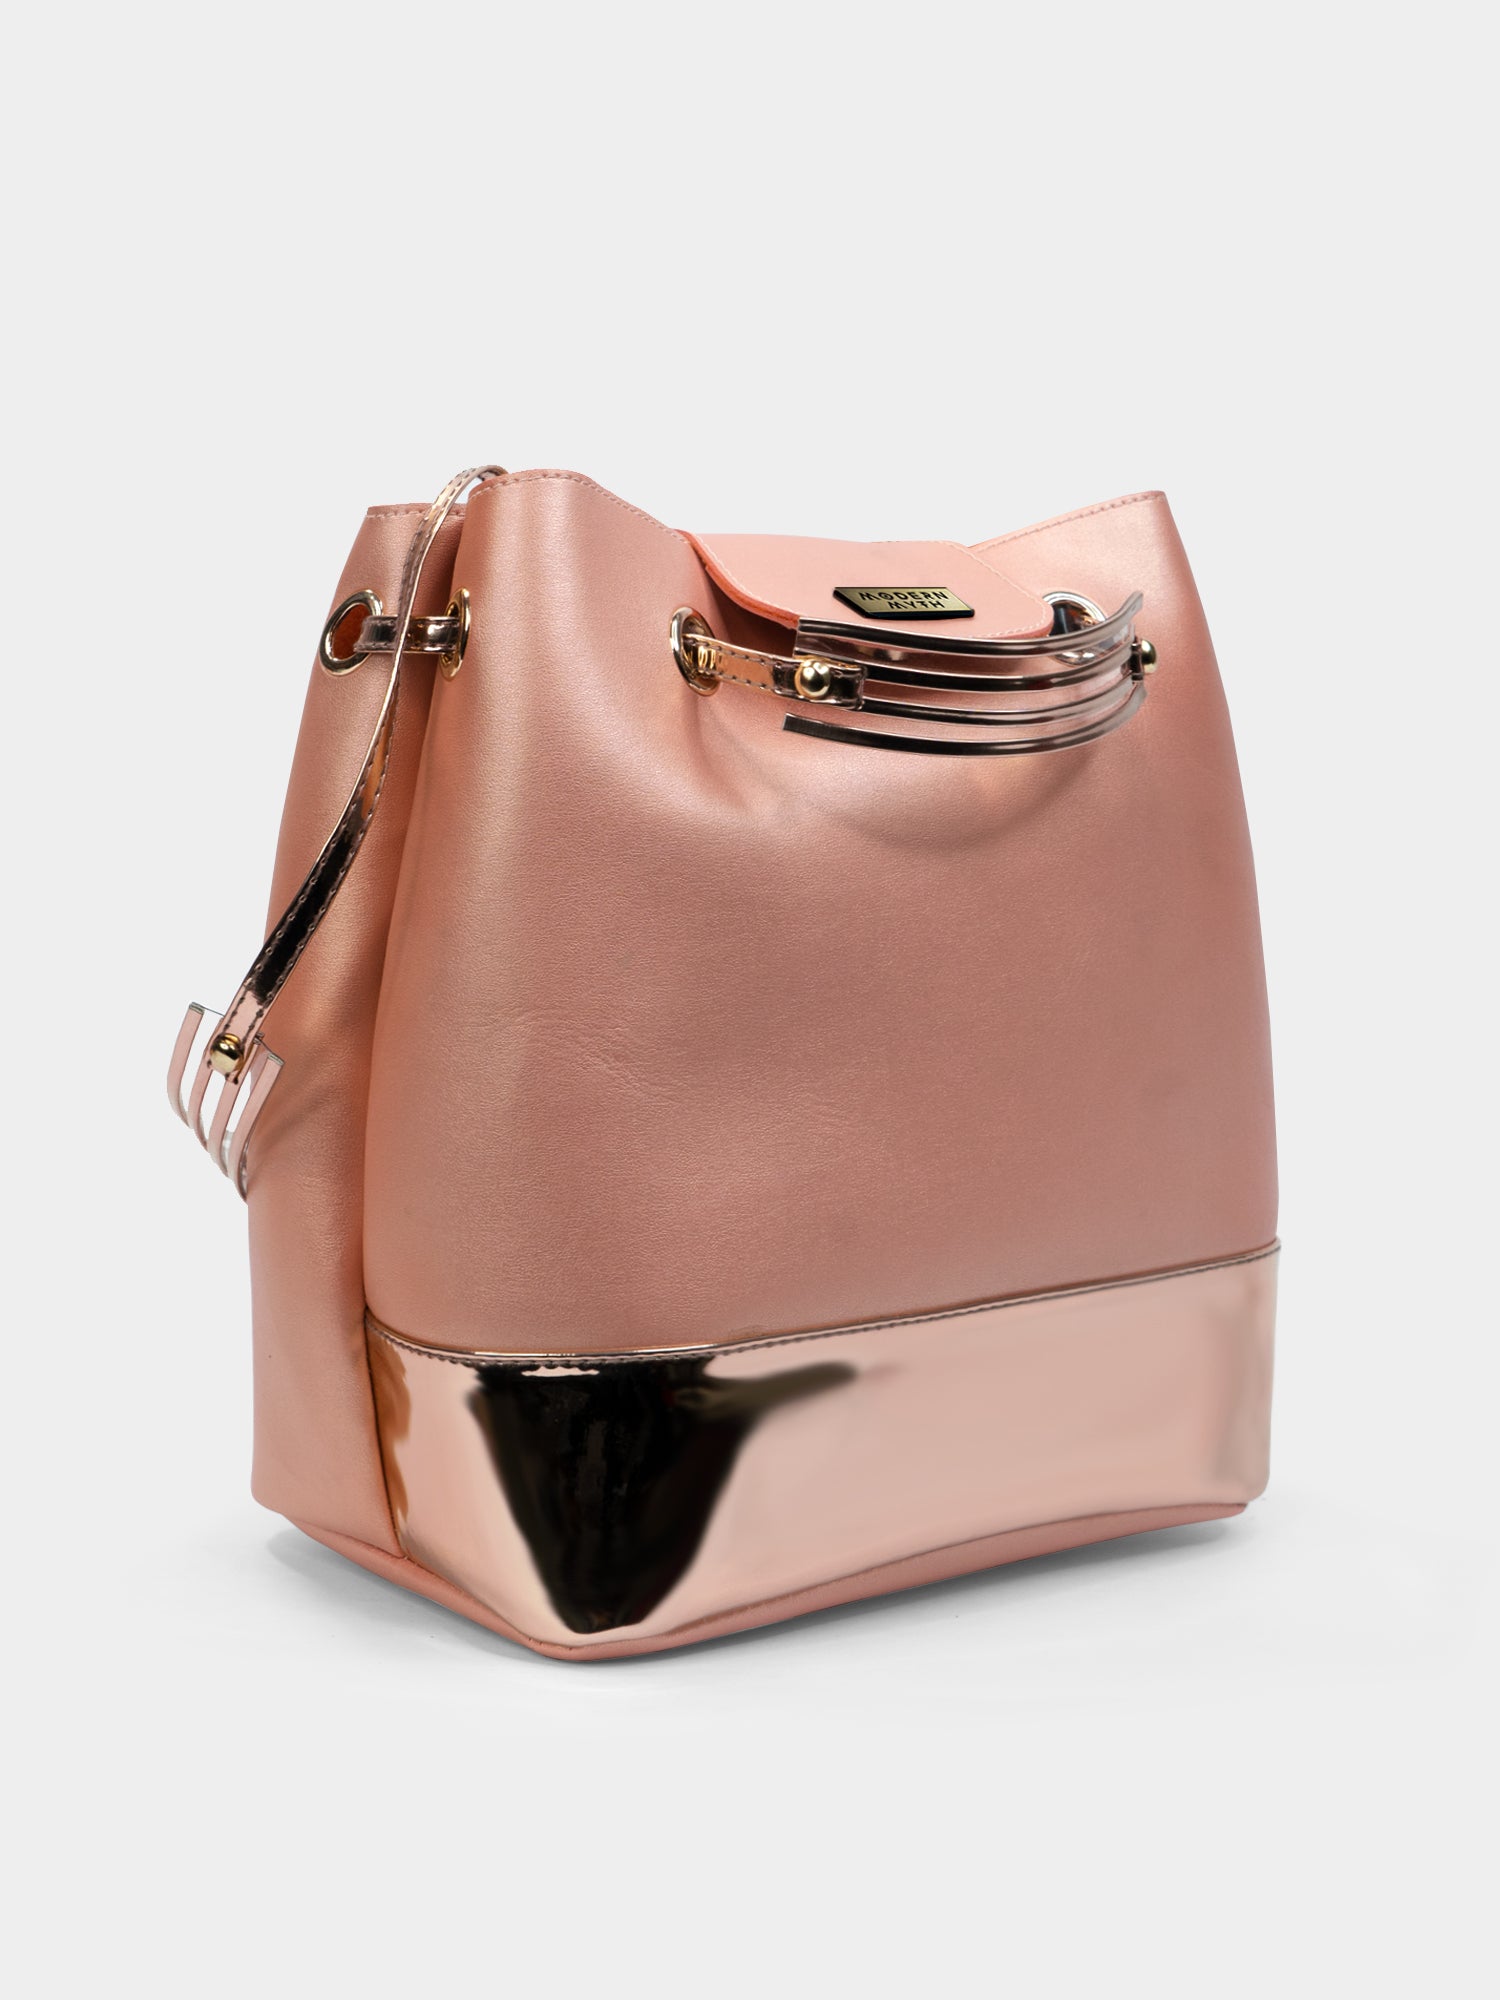 Sell or Pawn designer handbags near me | PawnZone